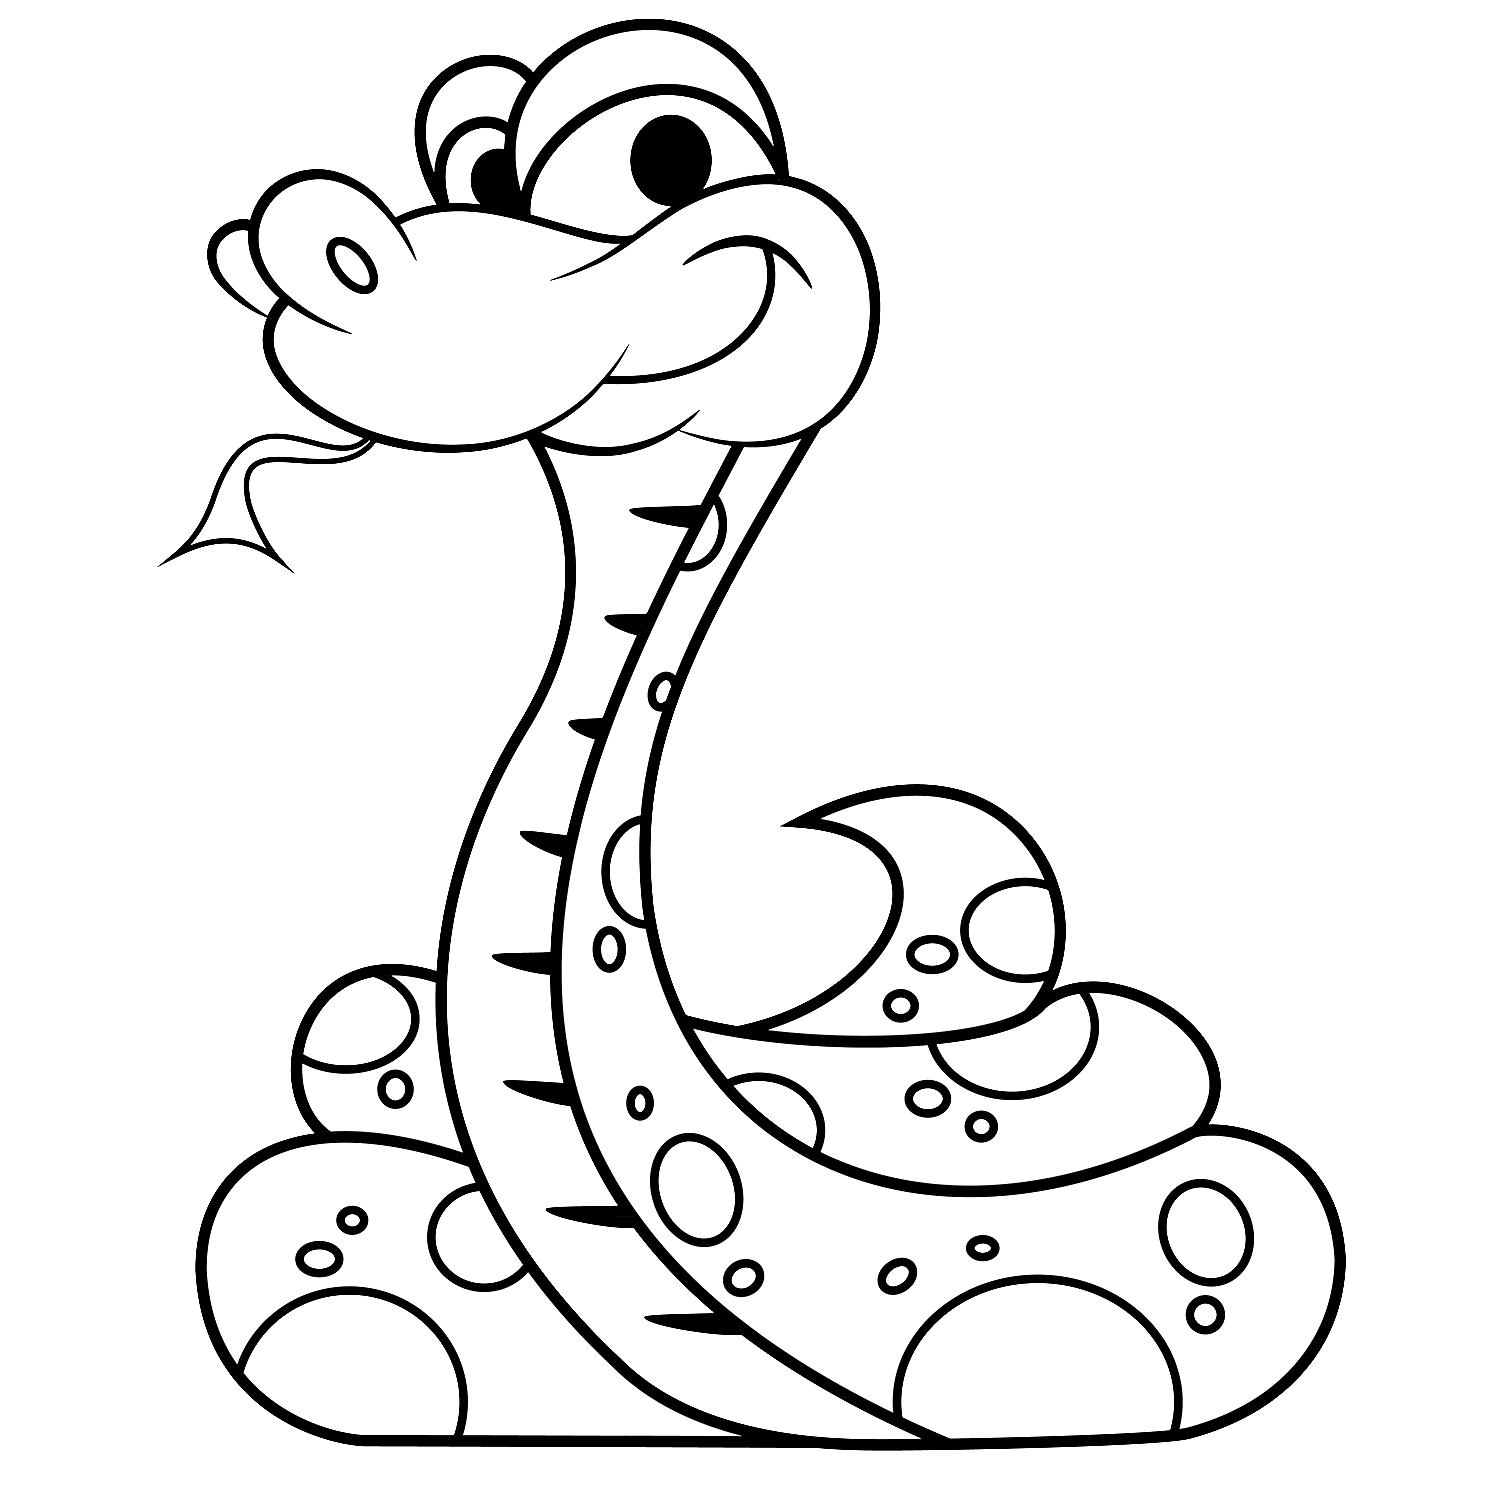 Garter Snake coloring #20, Download drawings